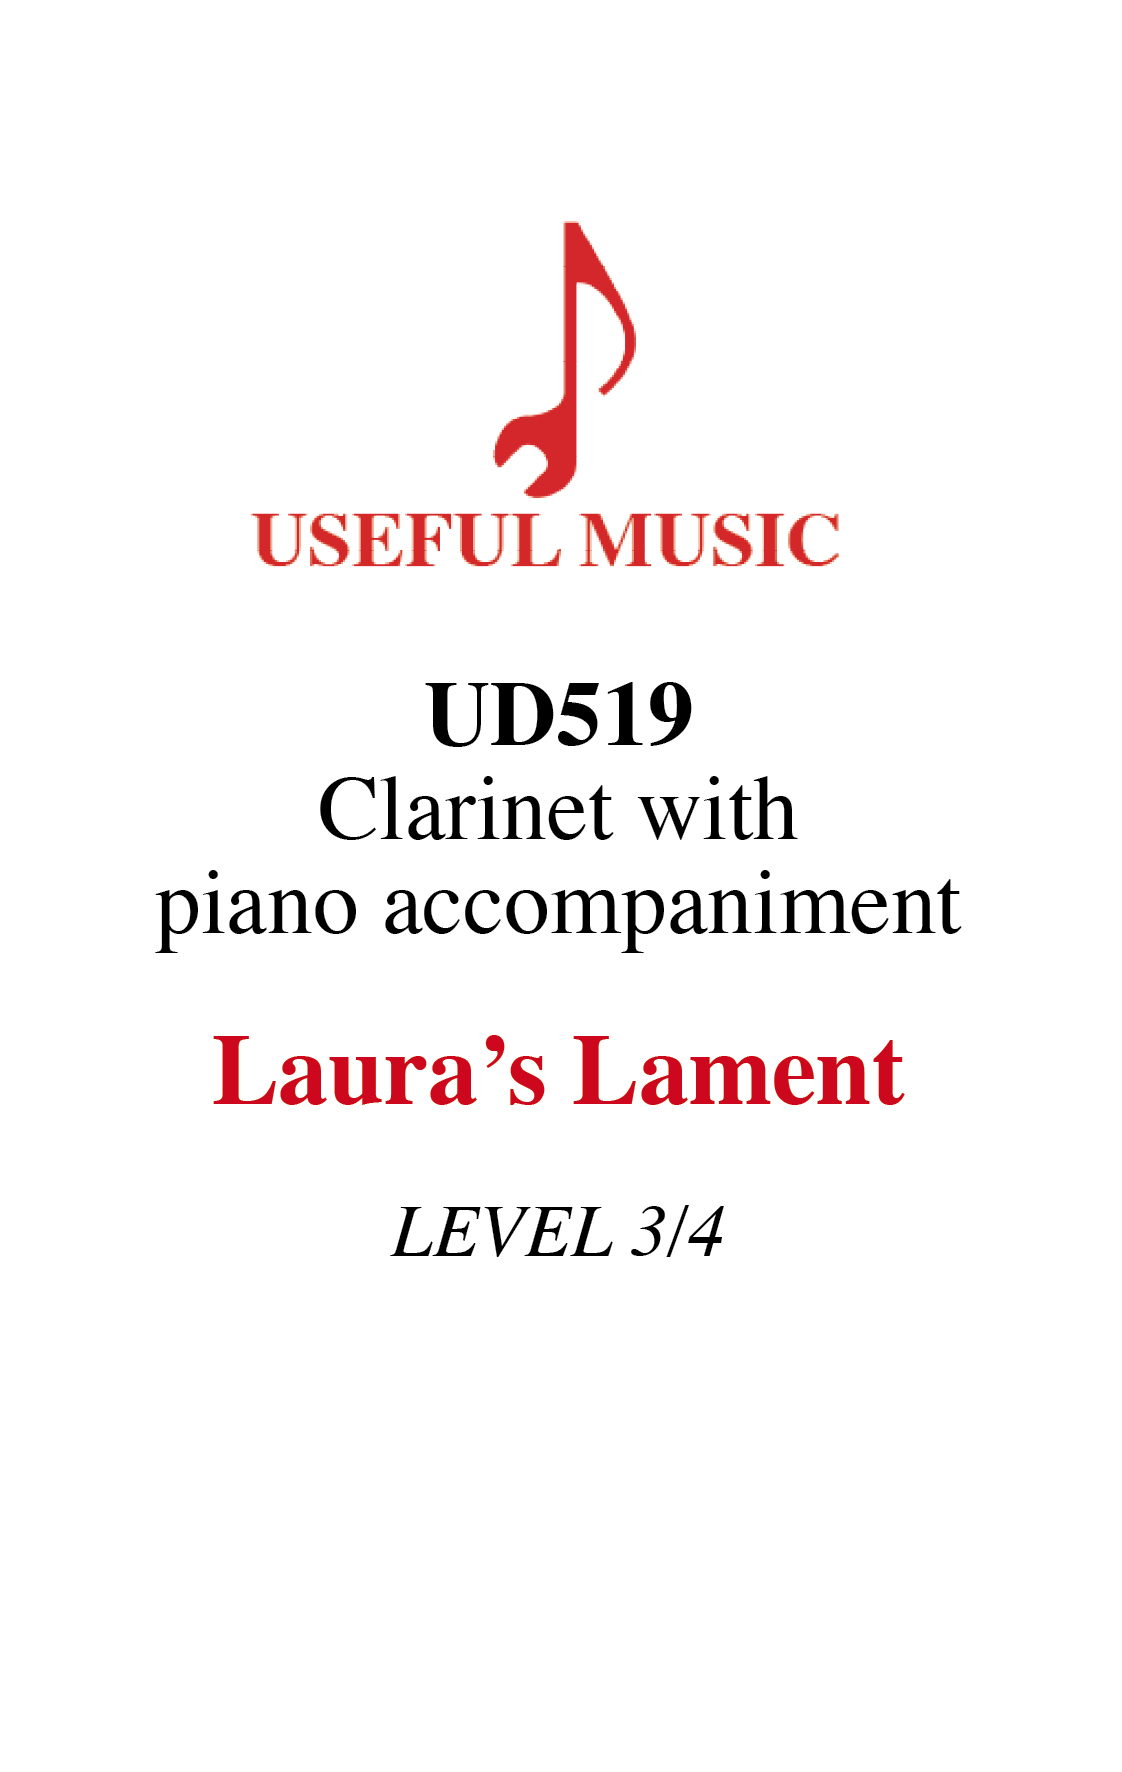 Laura's Lament - Clarinet with piano accompaniment